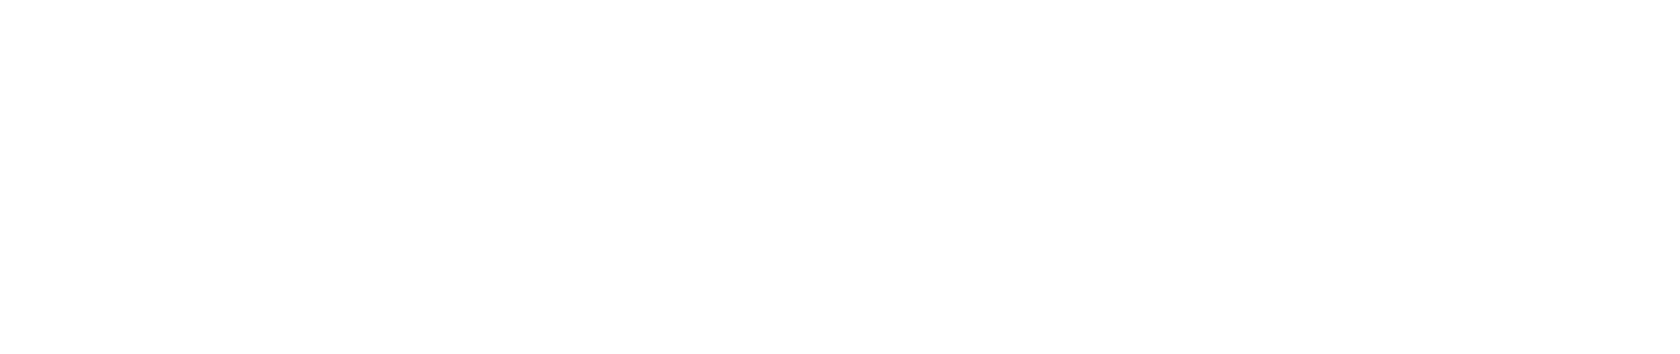 Prudential Financial logo large for dark backgrounds (transparent PNG)